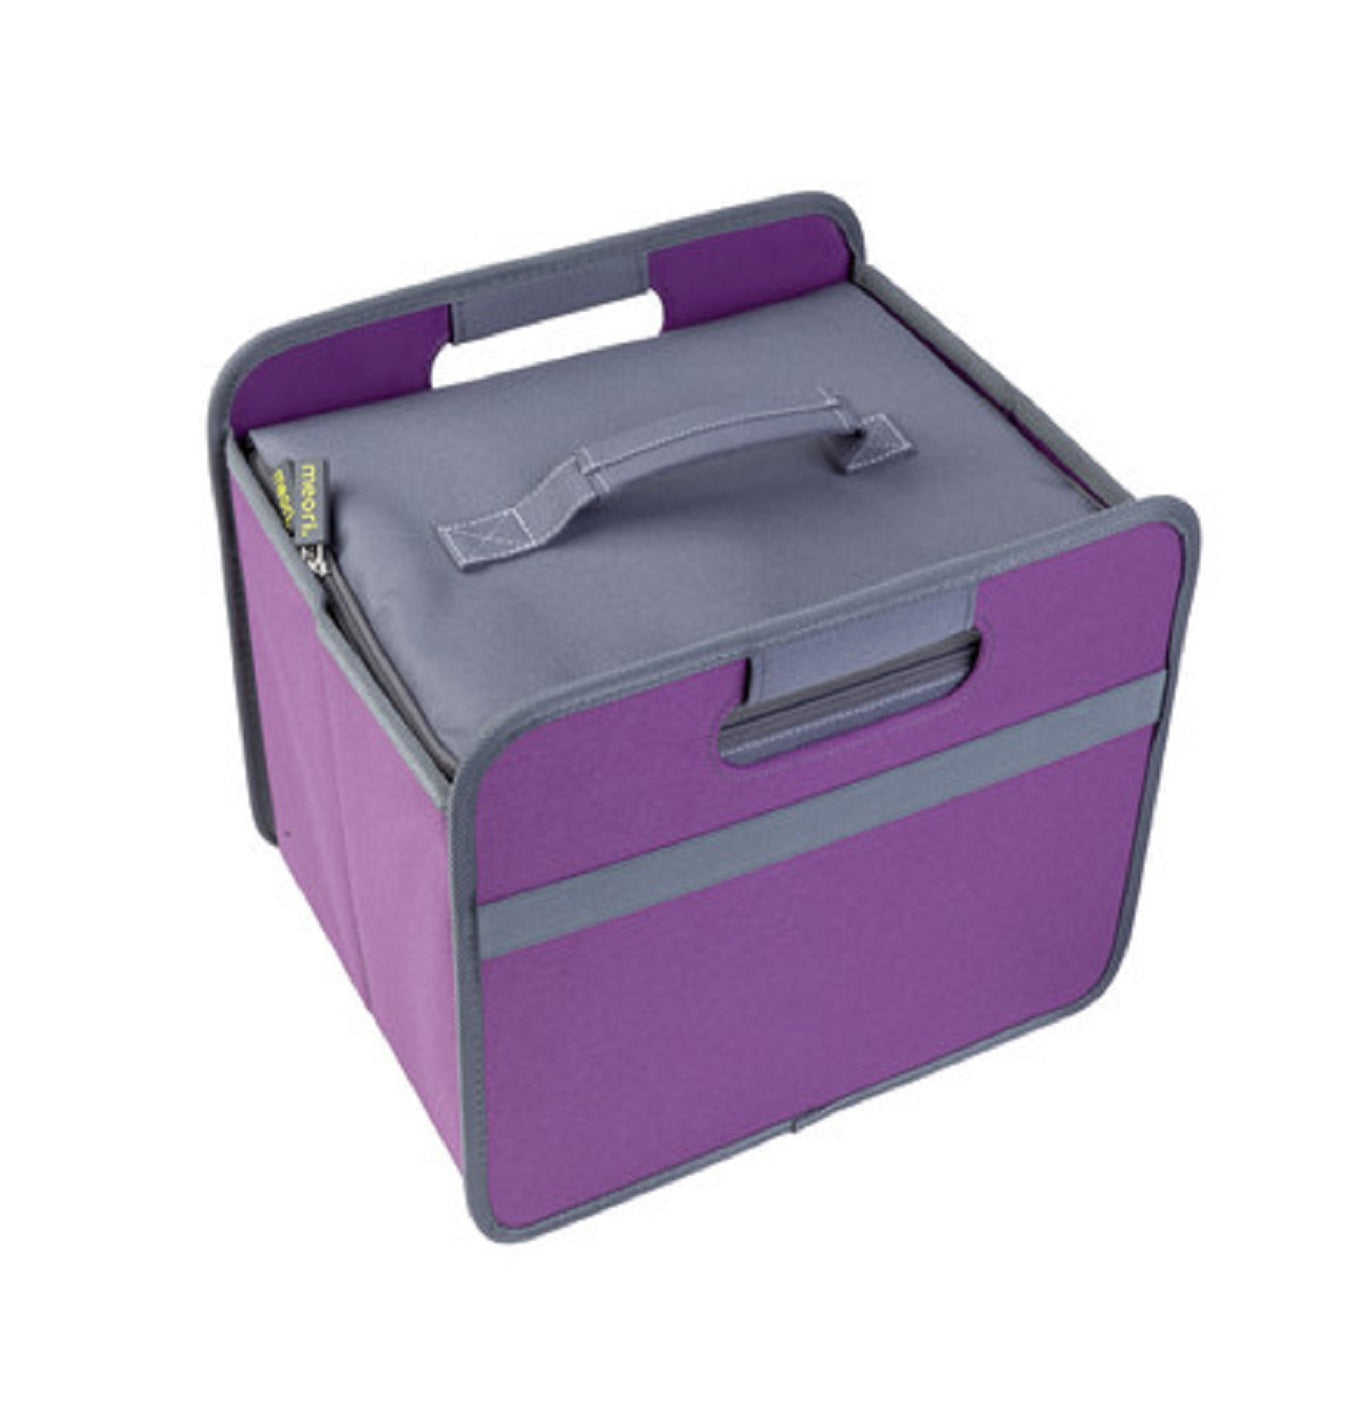 Meori® Small 15L Green Outdoor Foldable Storage Box